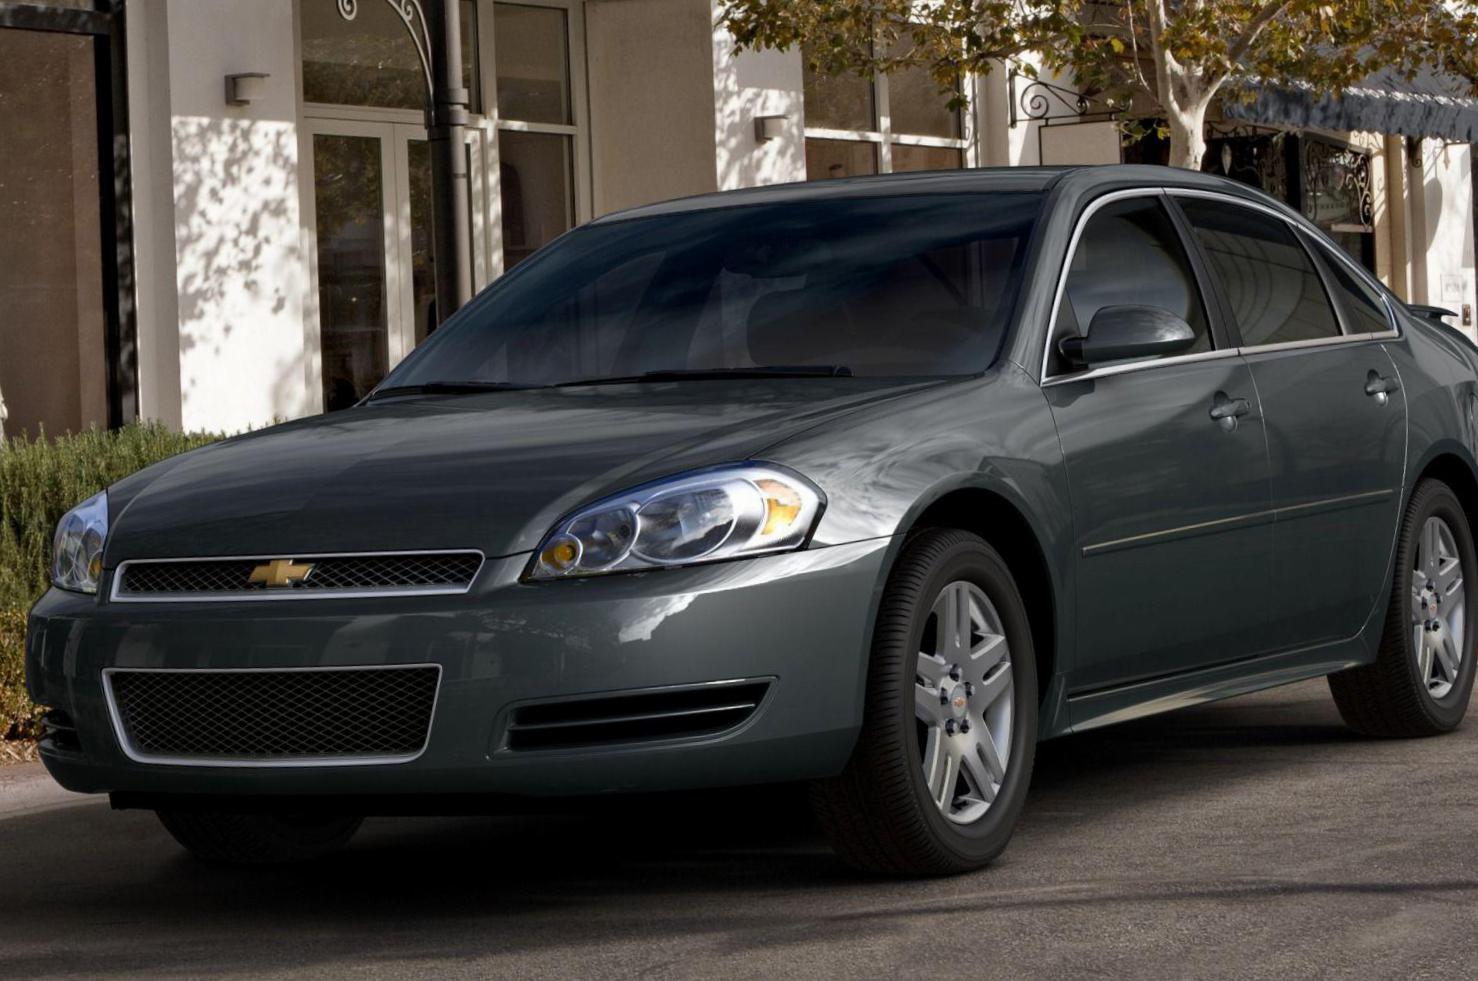 Chevrolet Impala concept 2012